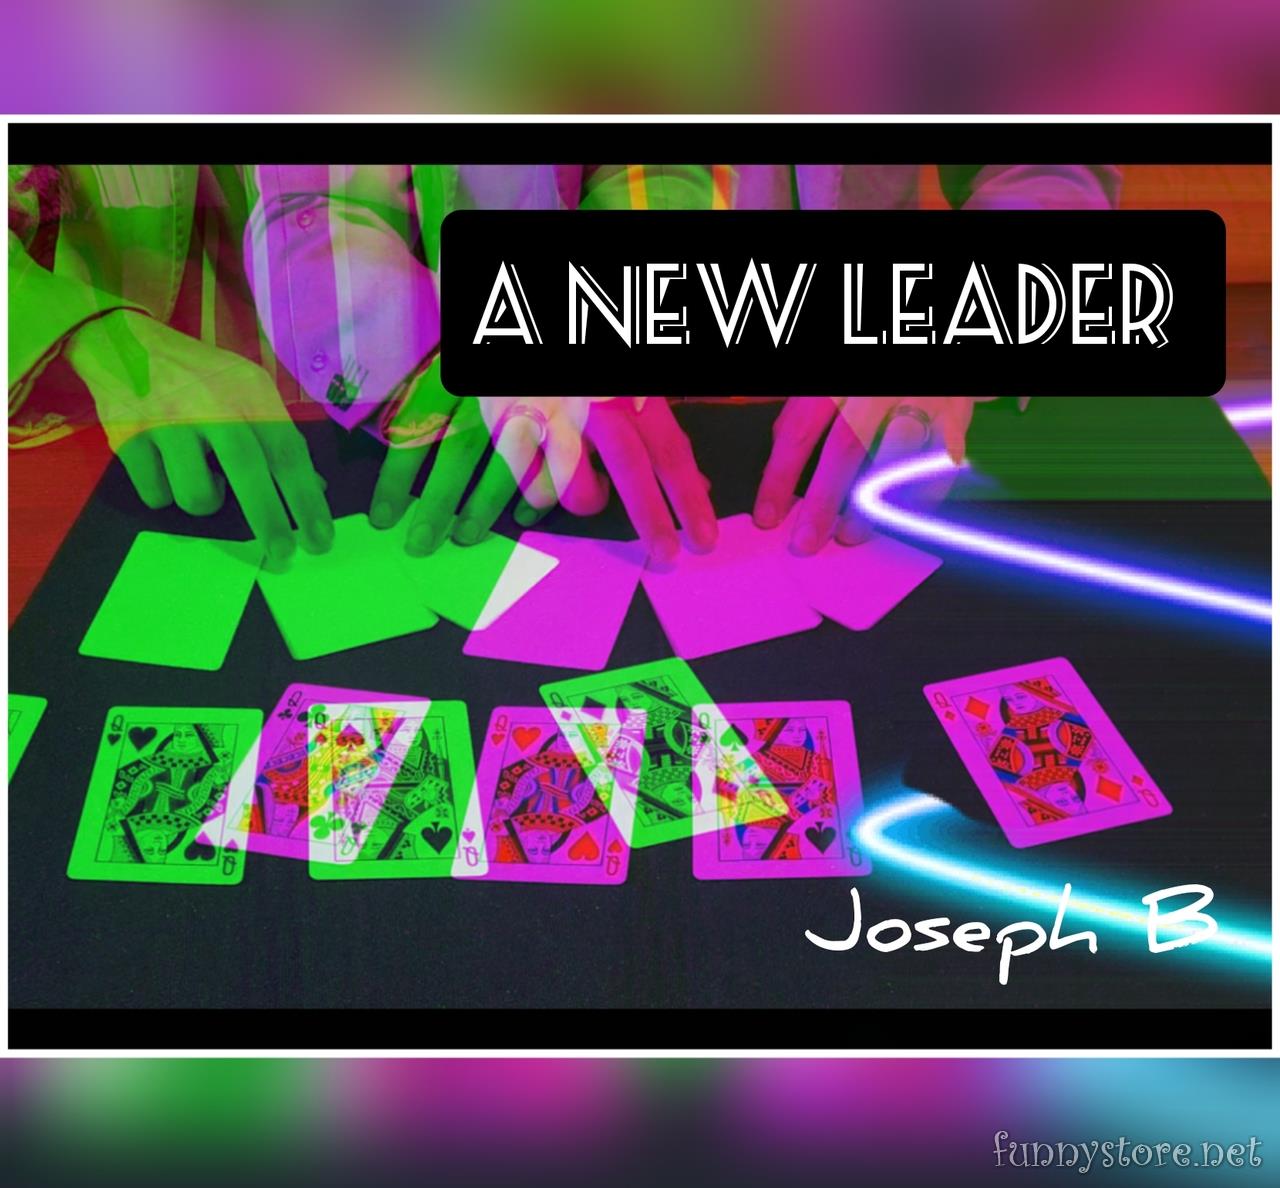 Joseph B. - A New Leader